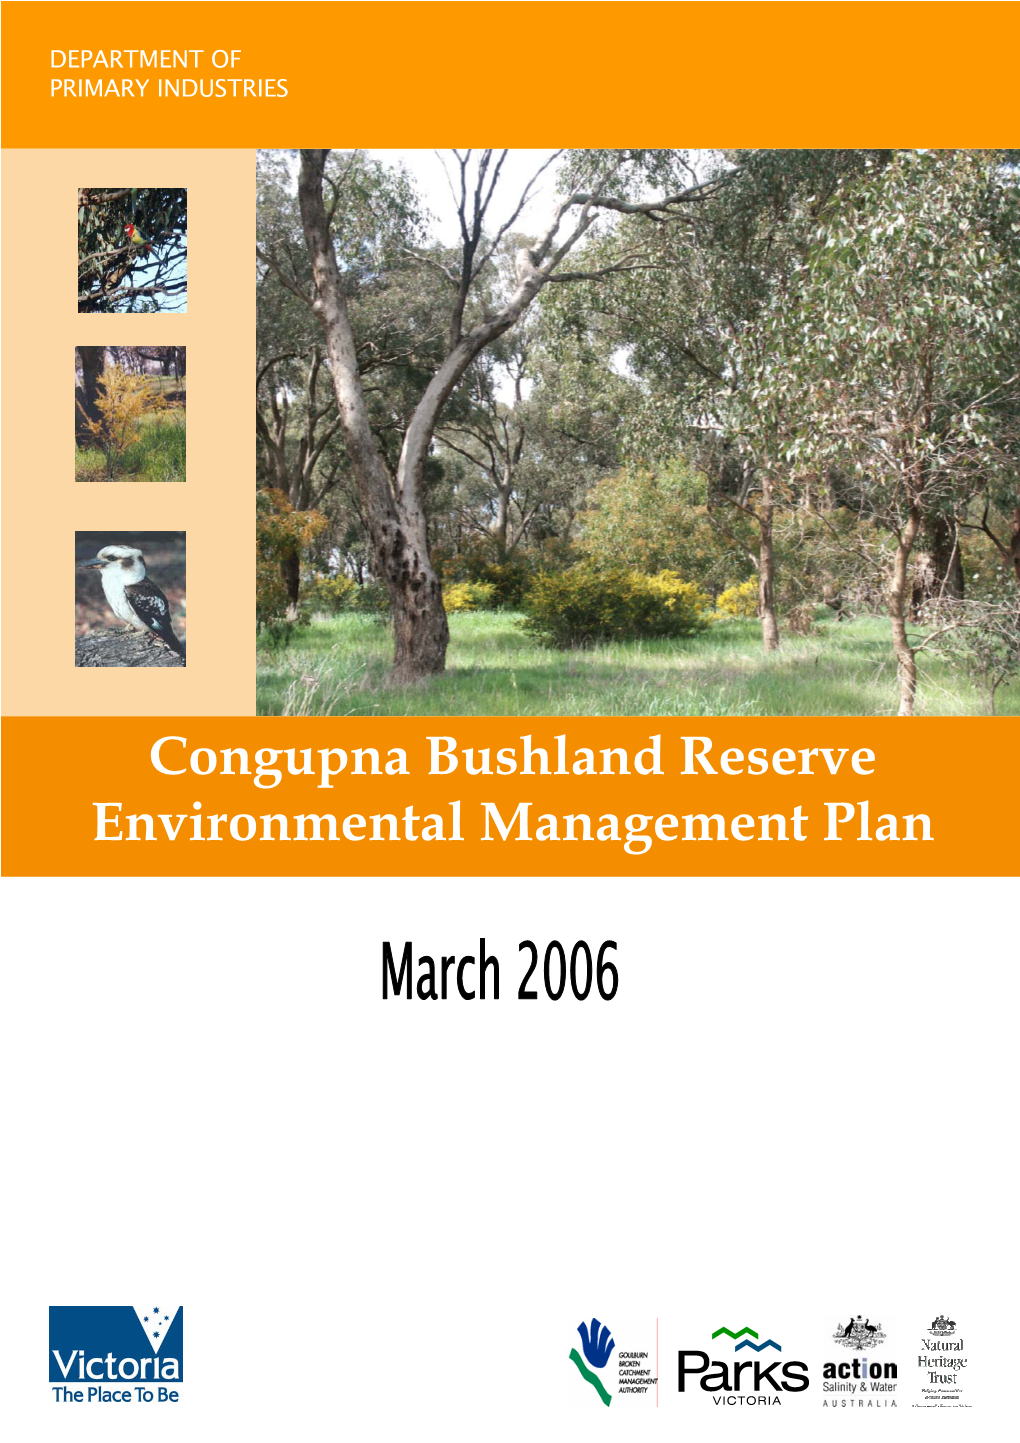 Congupna Bushland Reserve Environmental Management Plan